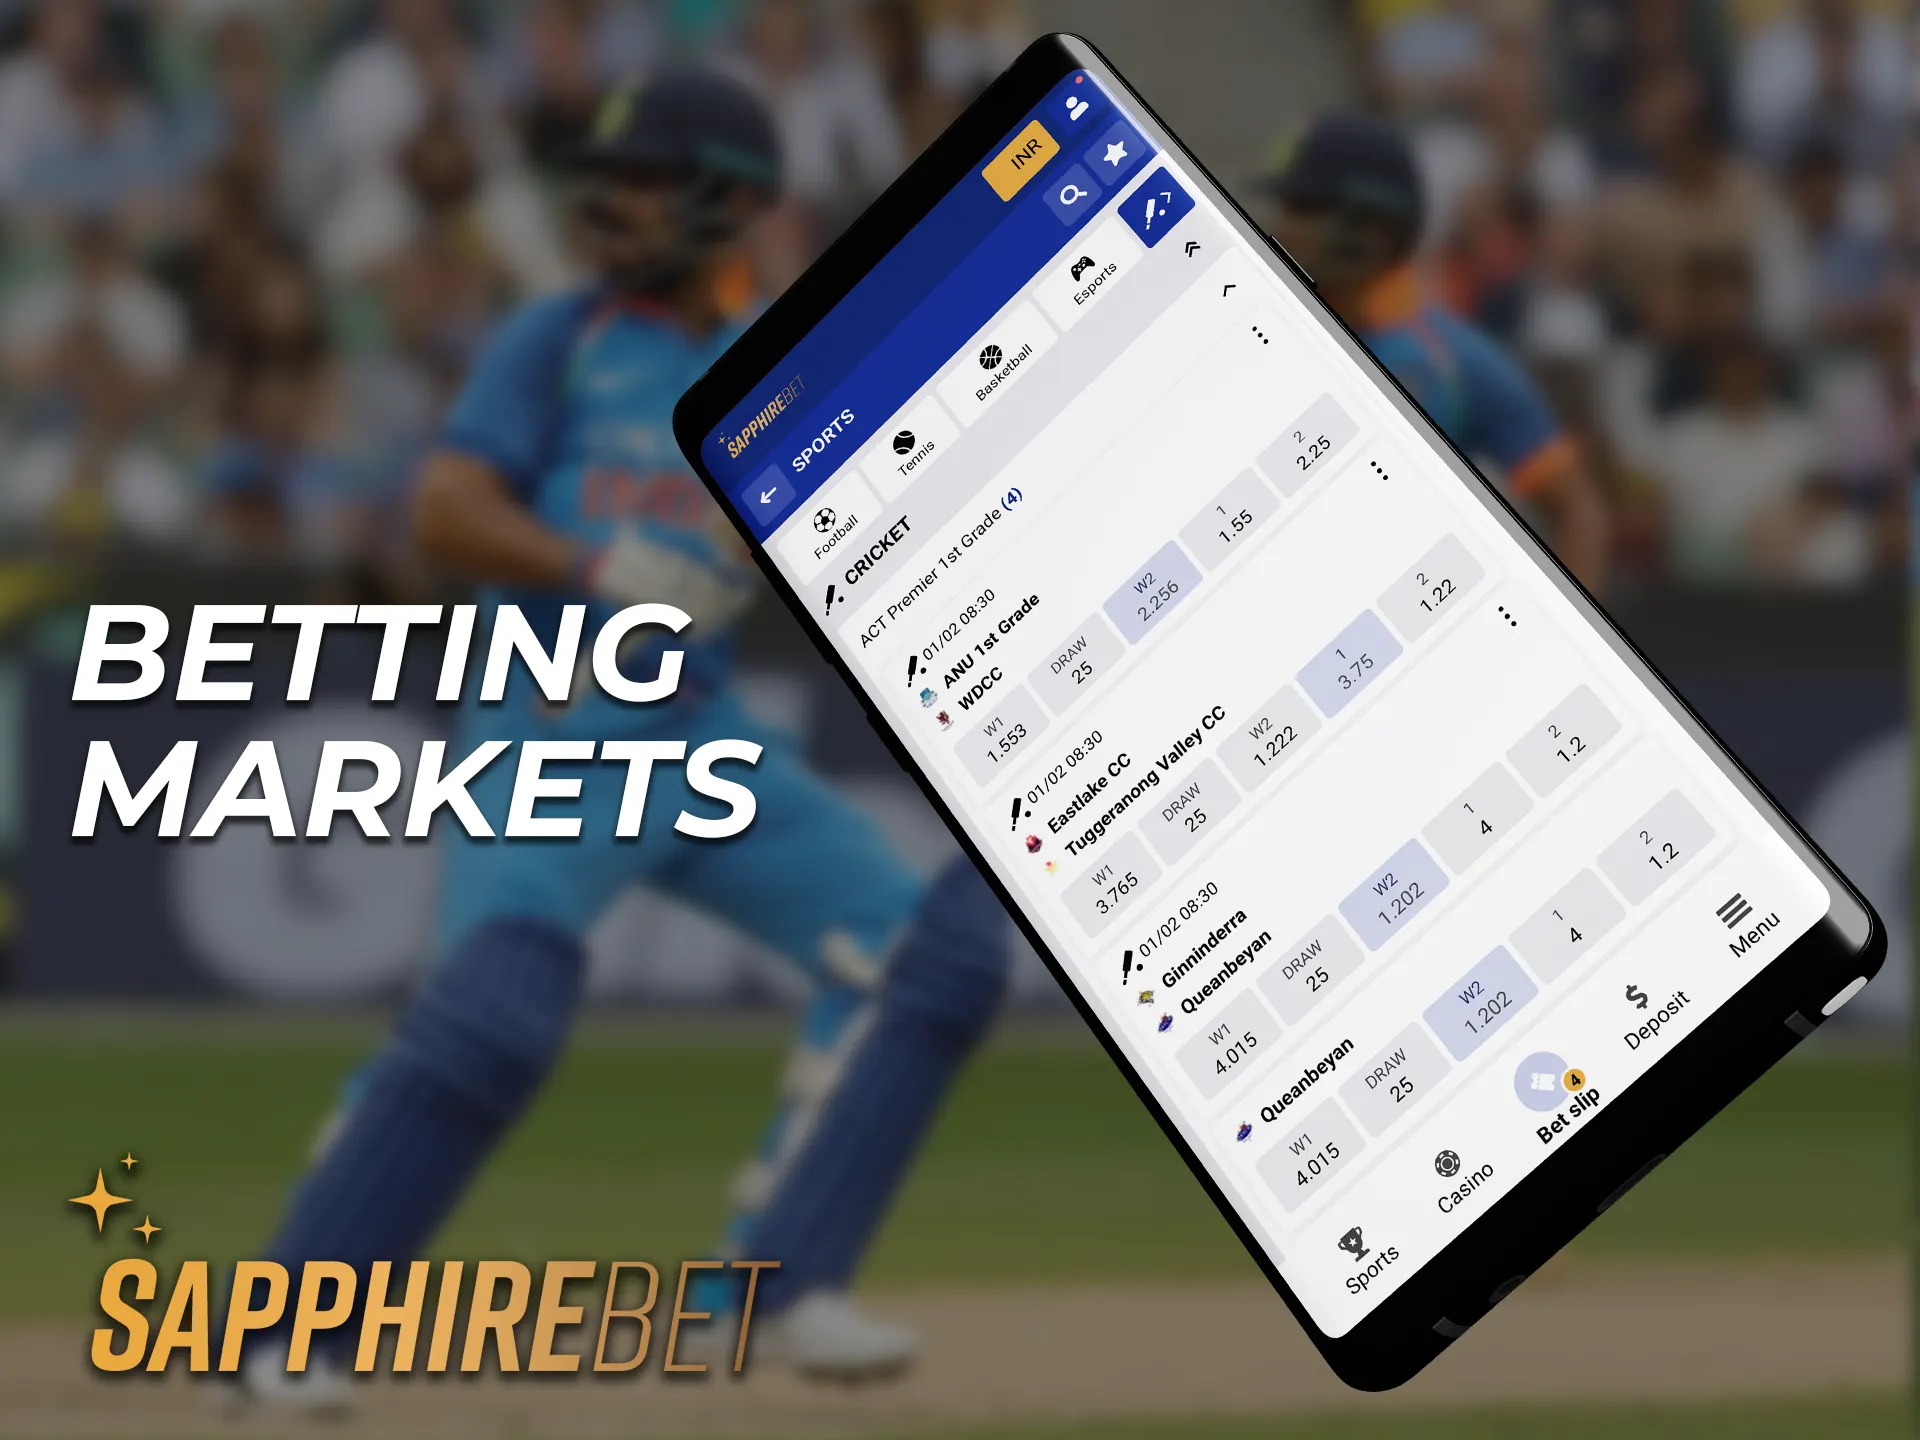 SapphireBet offers bettors a wide range of betting options.